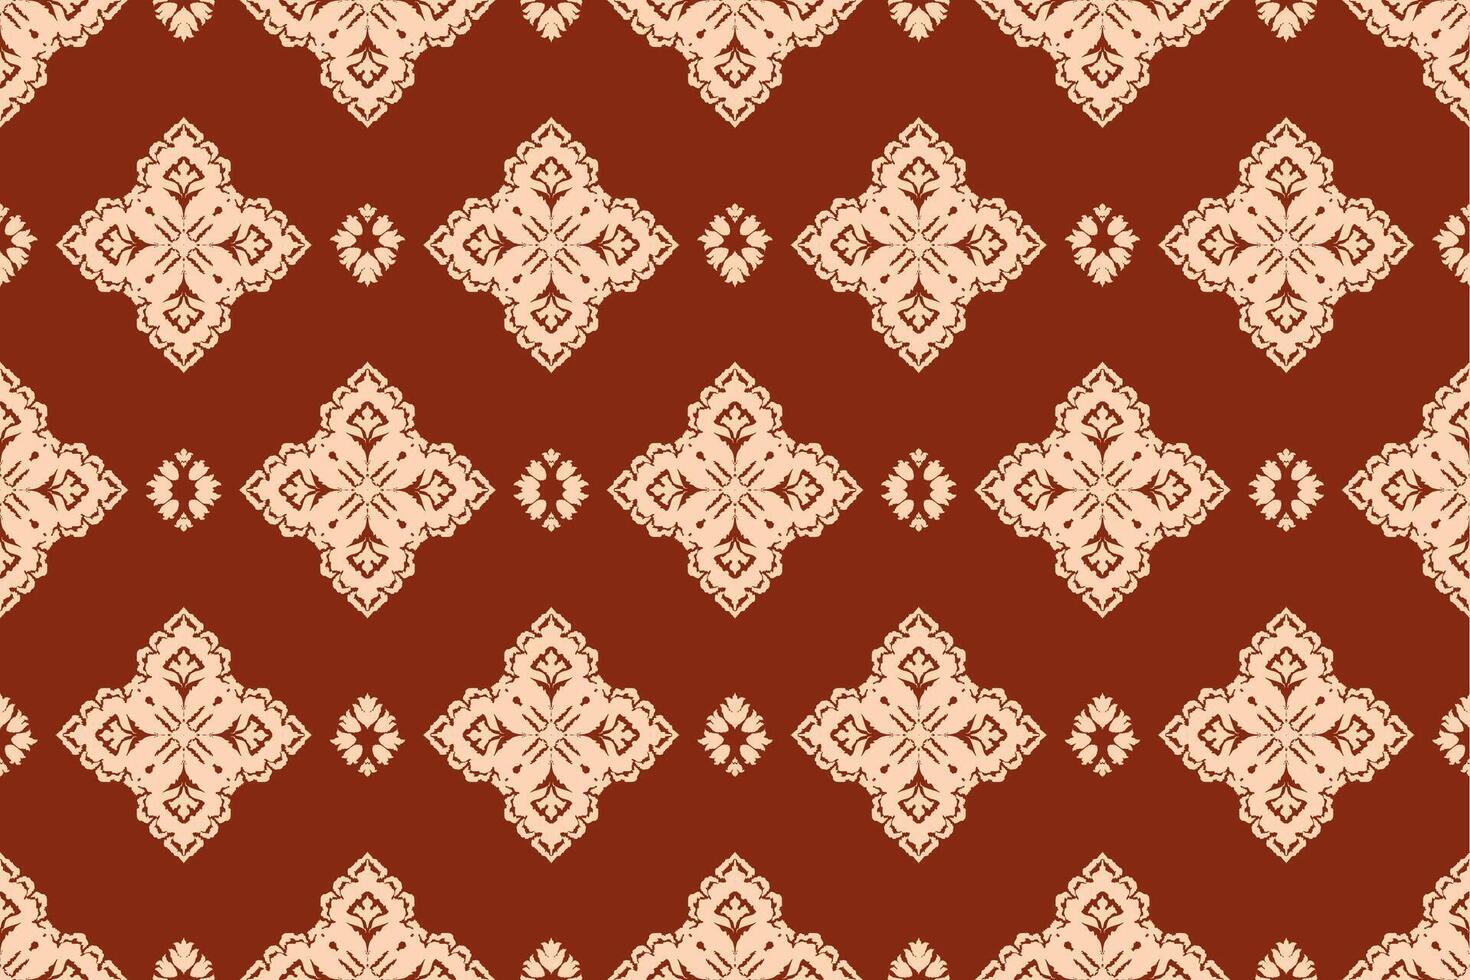 Ikat tribal Indian seamless pattern. Ethnic Aztec fabric carpet mandala ornament native boho chevron textile.Geometric African American oriental traditional vector illustrations. Embroidery style.